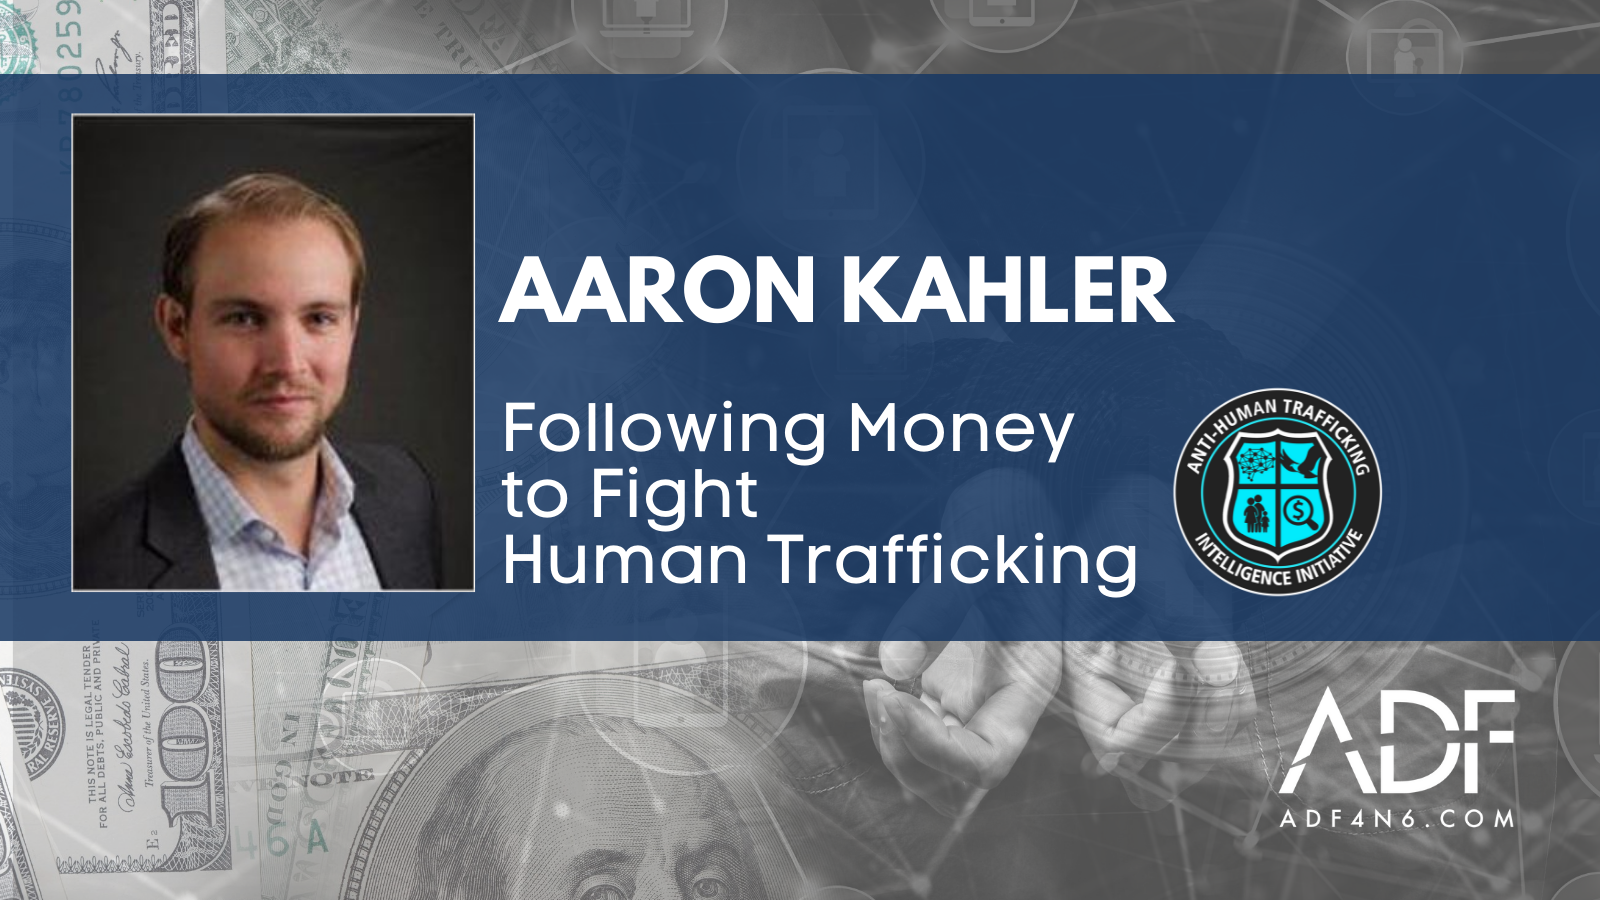 Meet Aaron Kahler: Following Money to Fight Human Trafficking